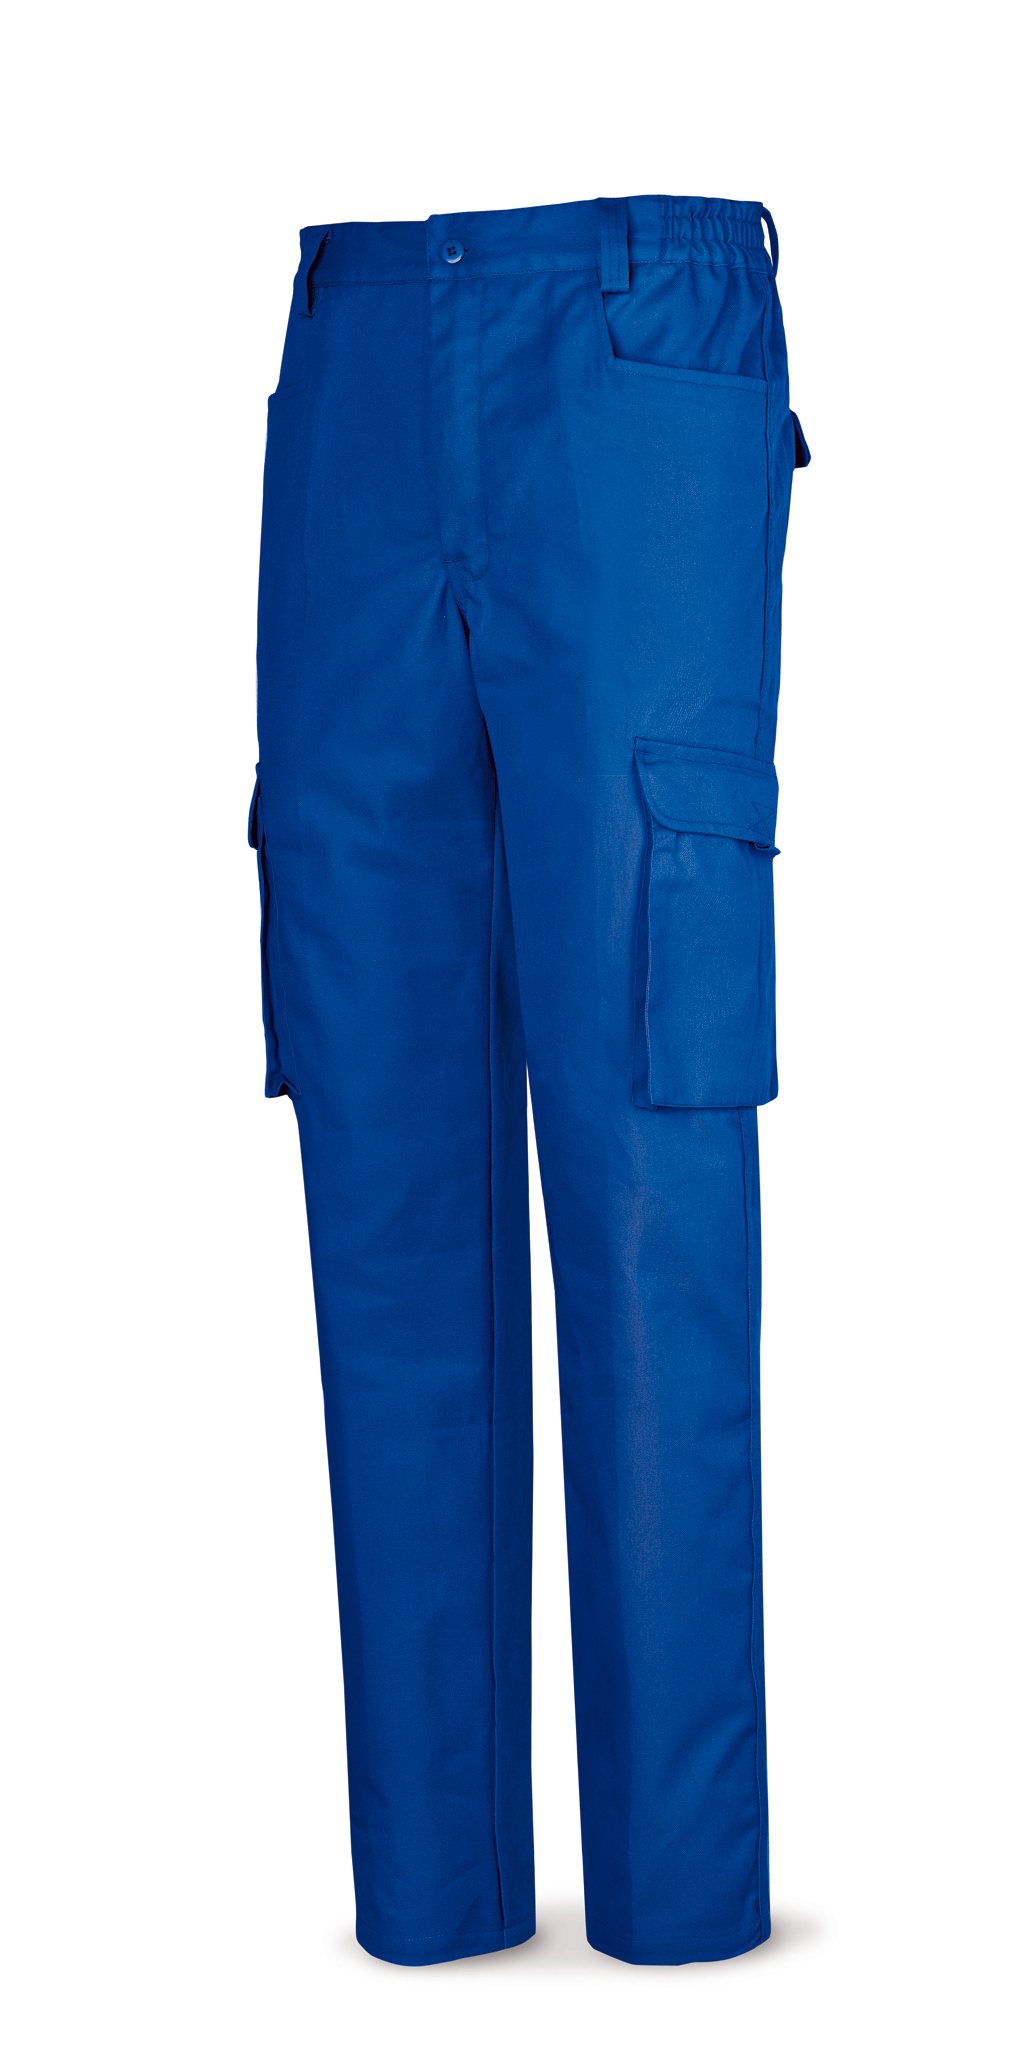 488-P Top Workwear Top Series 100% Cotton. Royal blue.